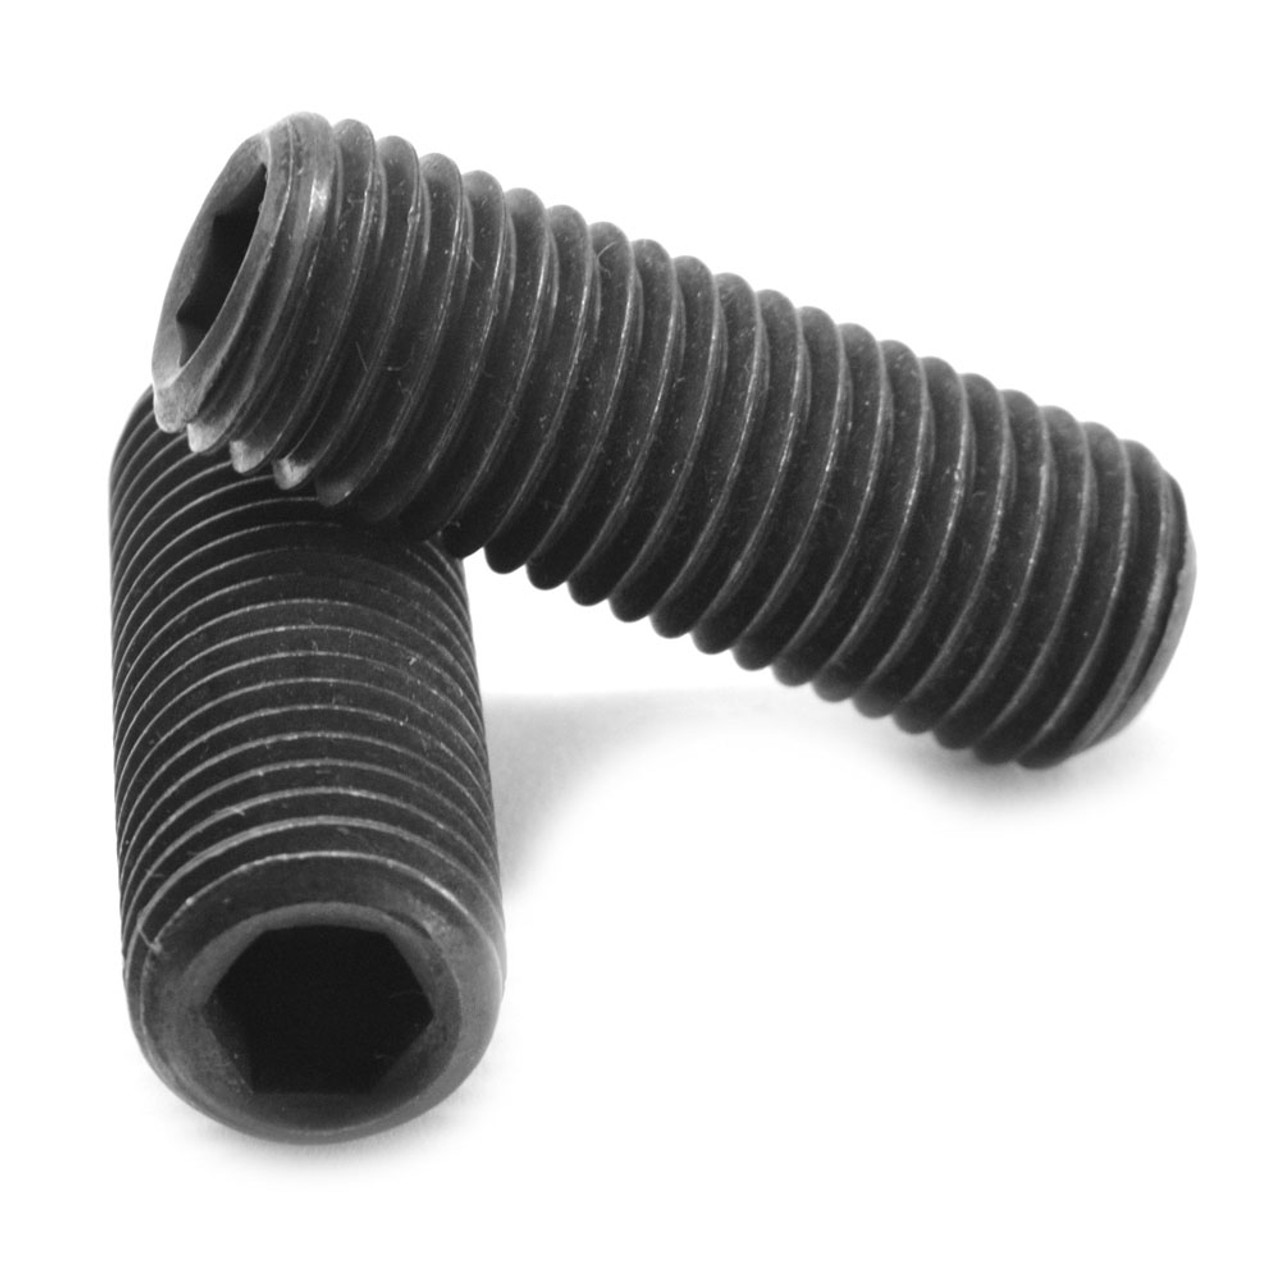 M8 x 1.25 x 16 MM Coarse Thread ISO 4029 / DIN 916 Class 45H Socket Set Screw Cup Point Alloy Steel Black Oxide